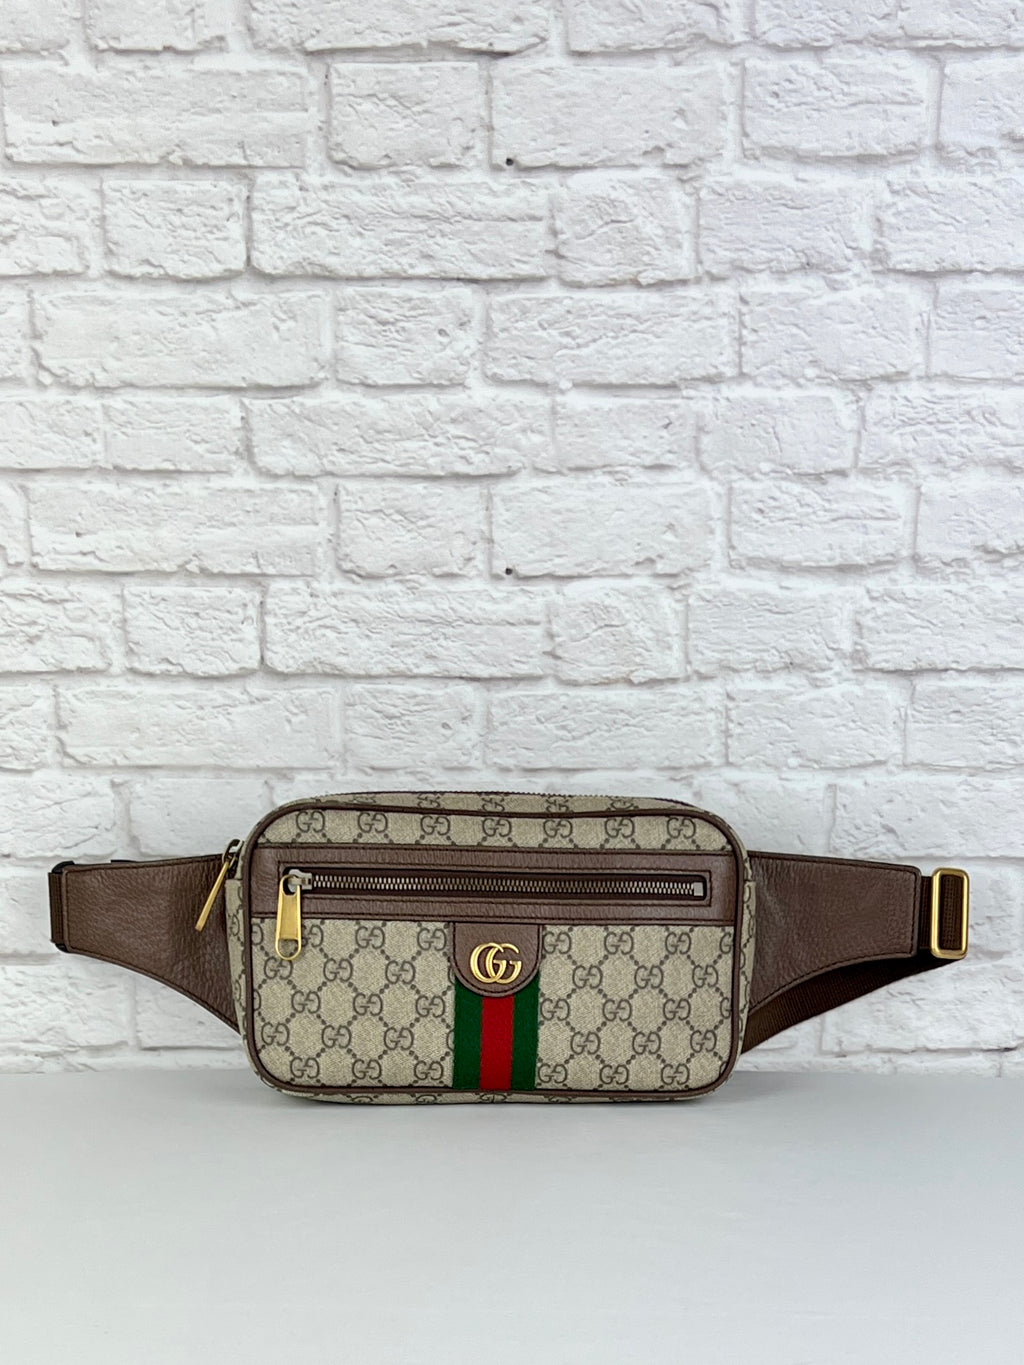 Gucci Ophidia GG Belt Bag, Beige